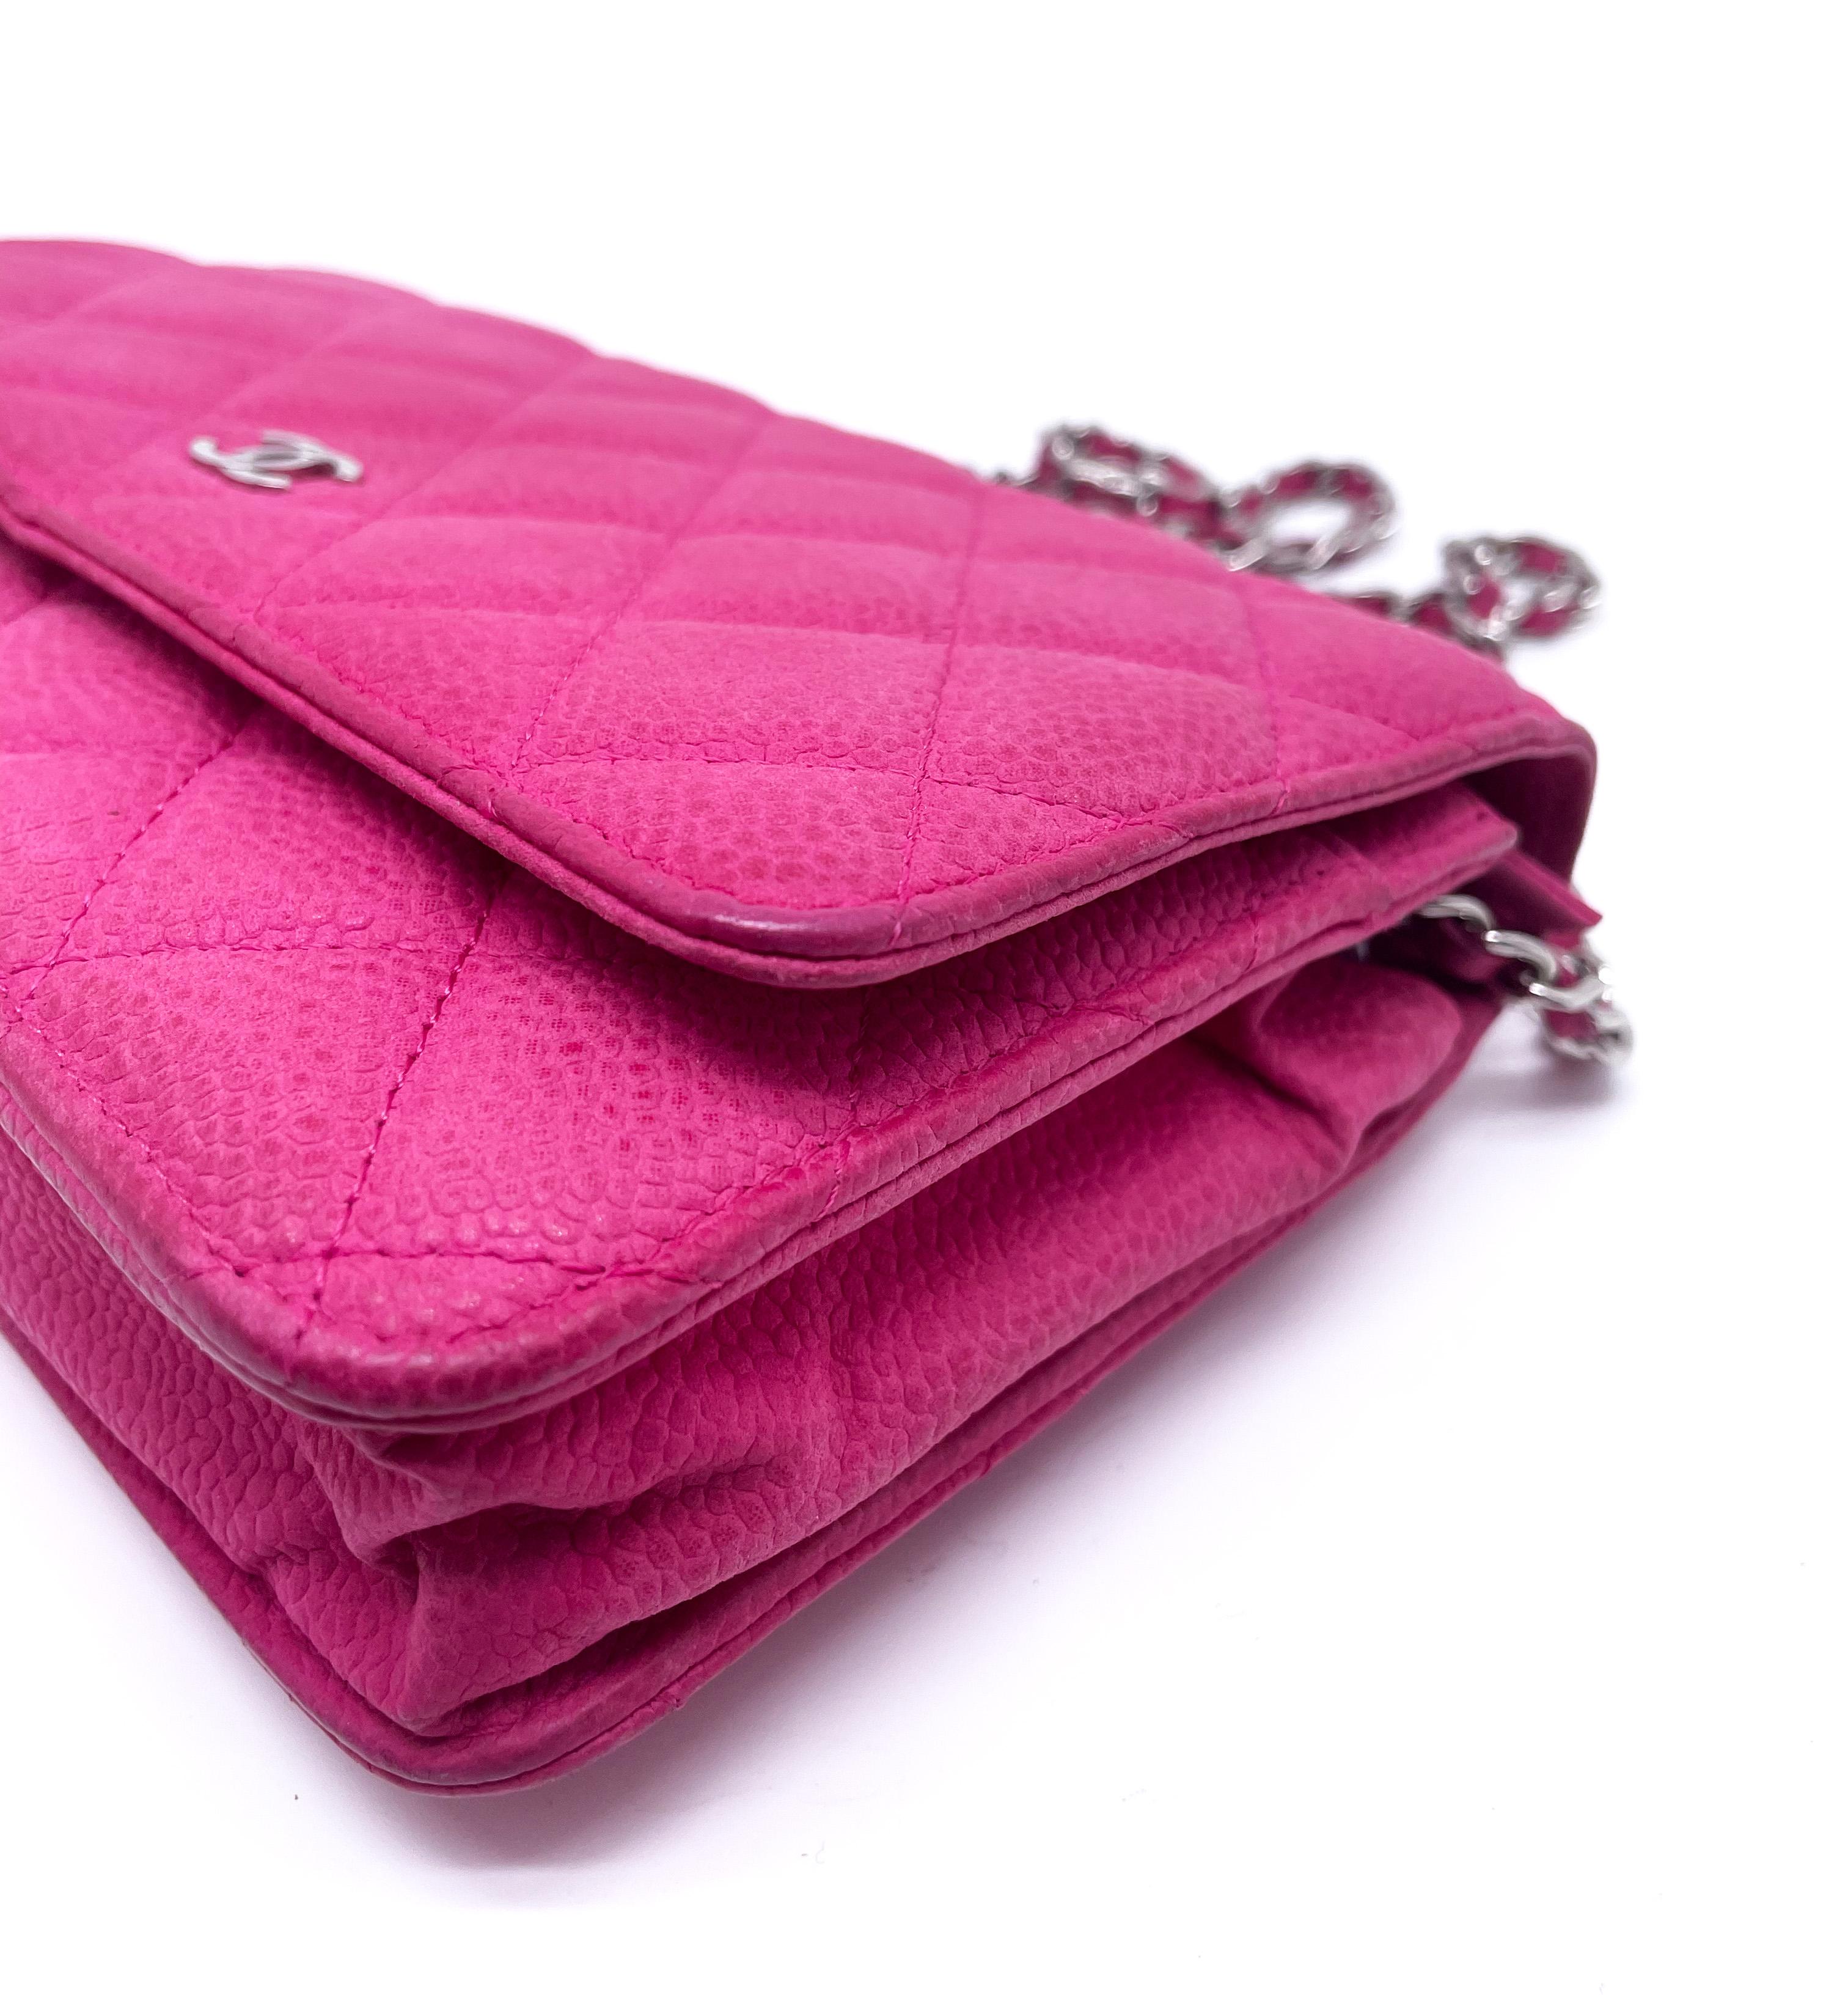 Chanel Wallet on Chain Handbag Pink Caviar Leather 5